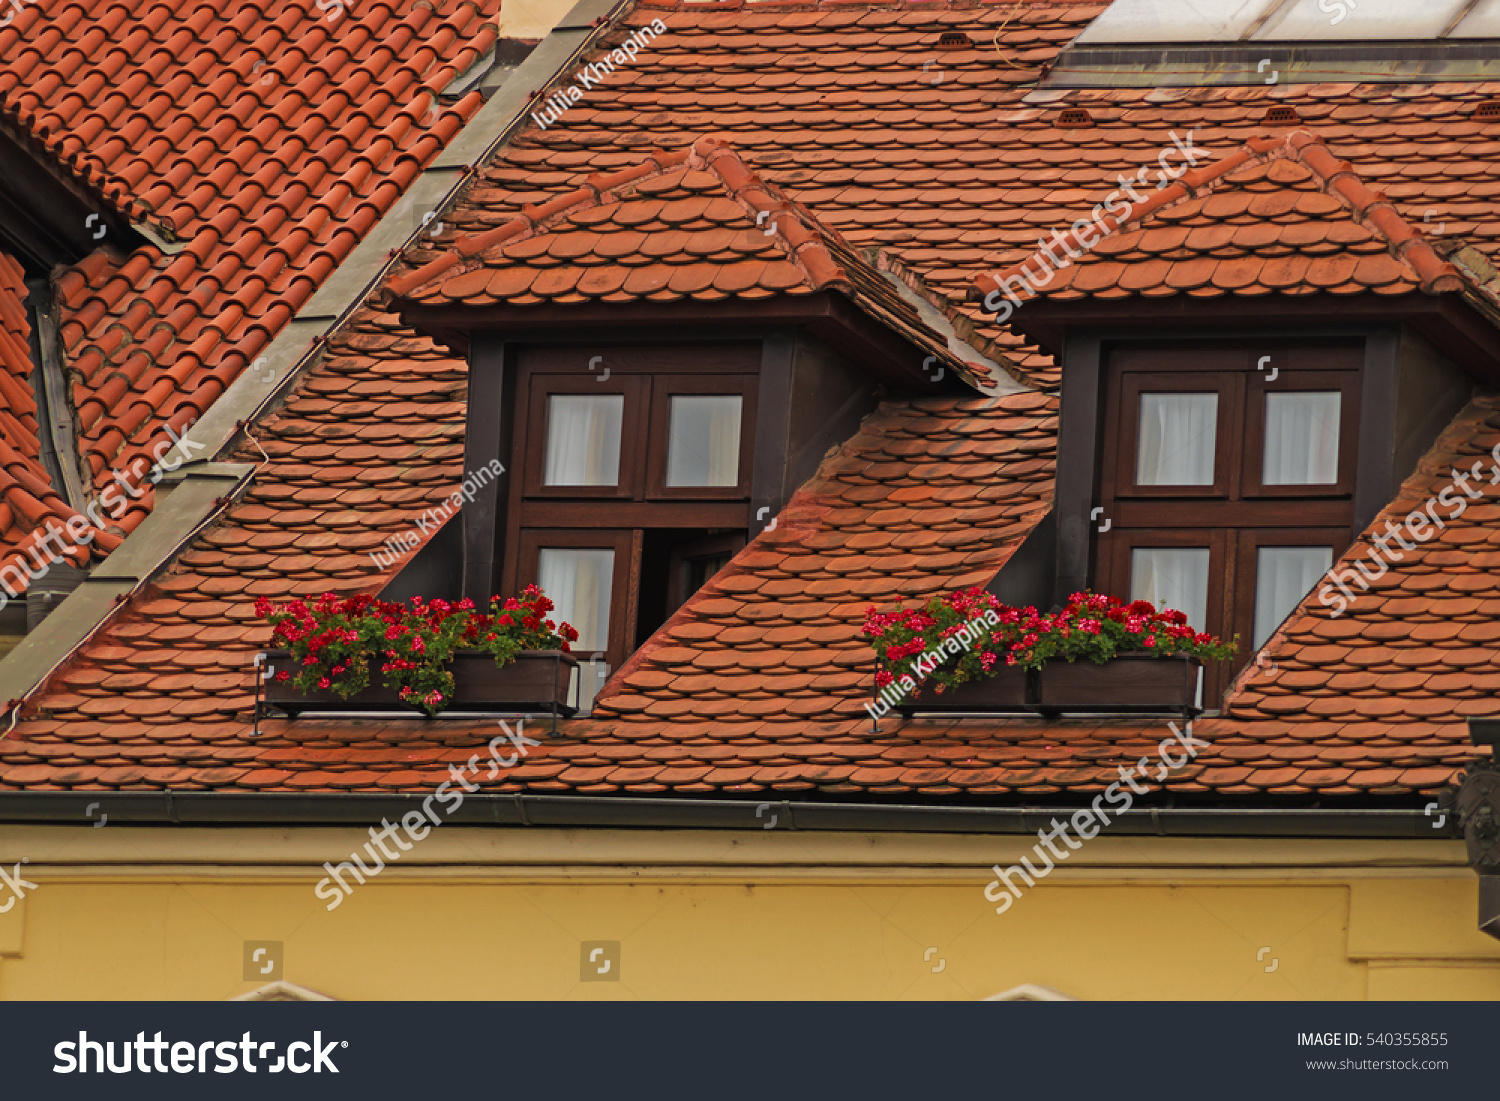 Orange Tile Roof Two Windows Flowers Stock Photo 540355855 